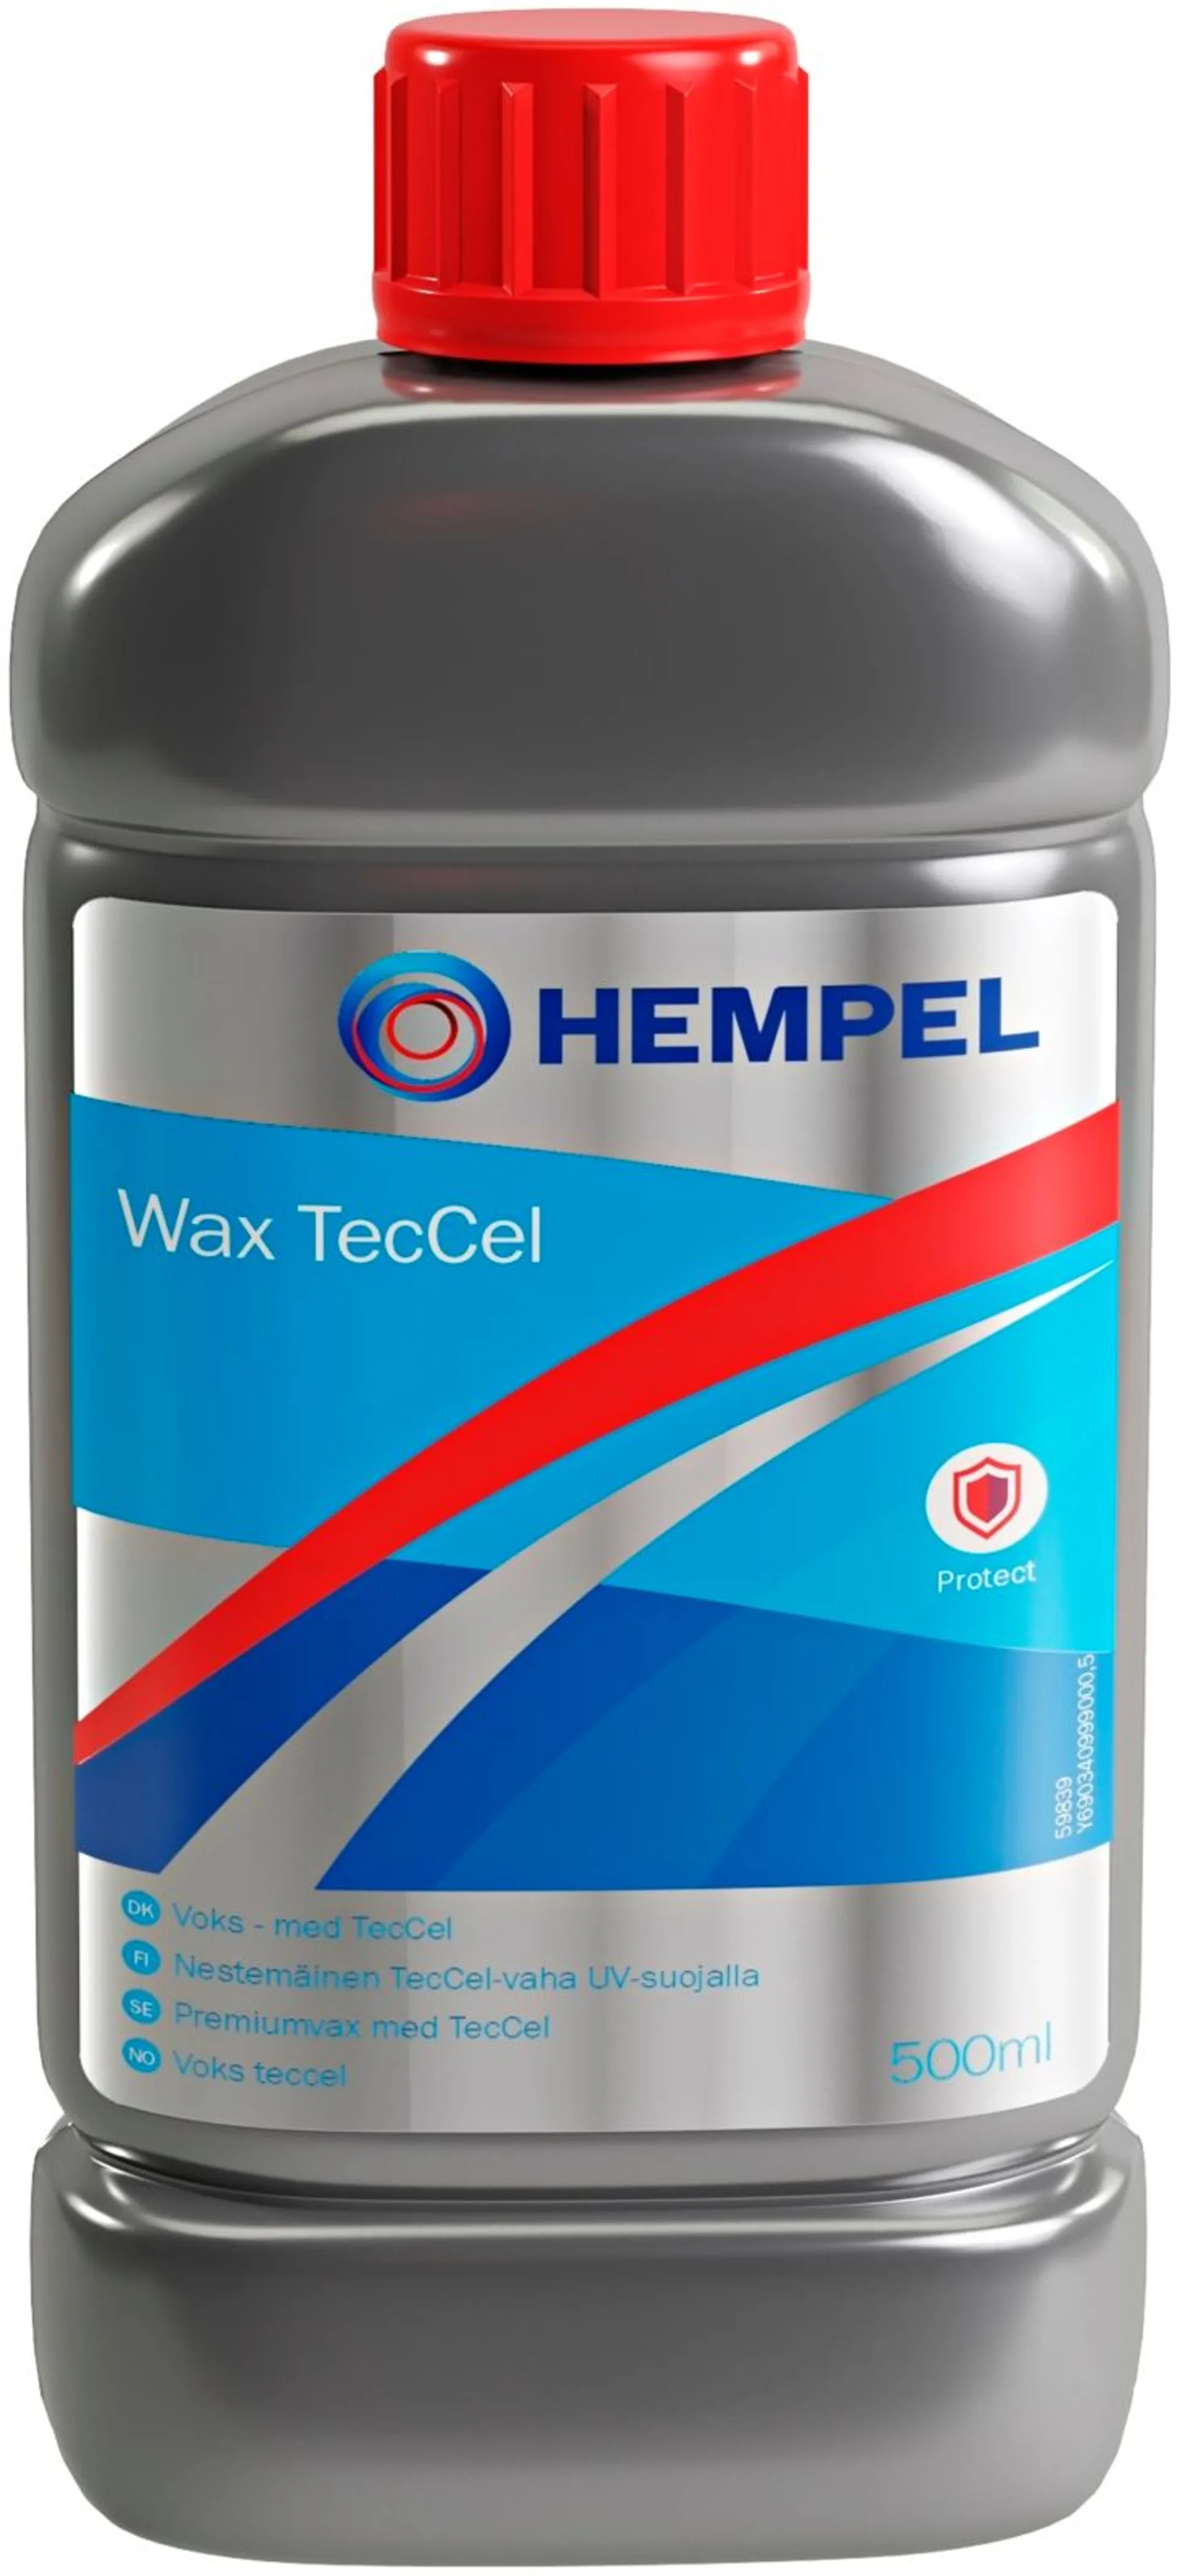 Hempel Wax TecCel viimeistelyvaha 0,5l